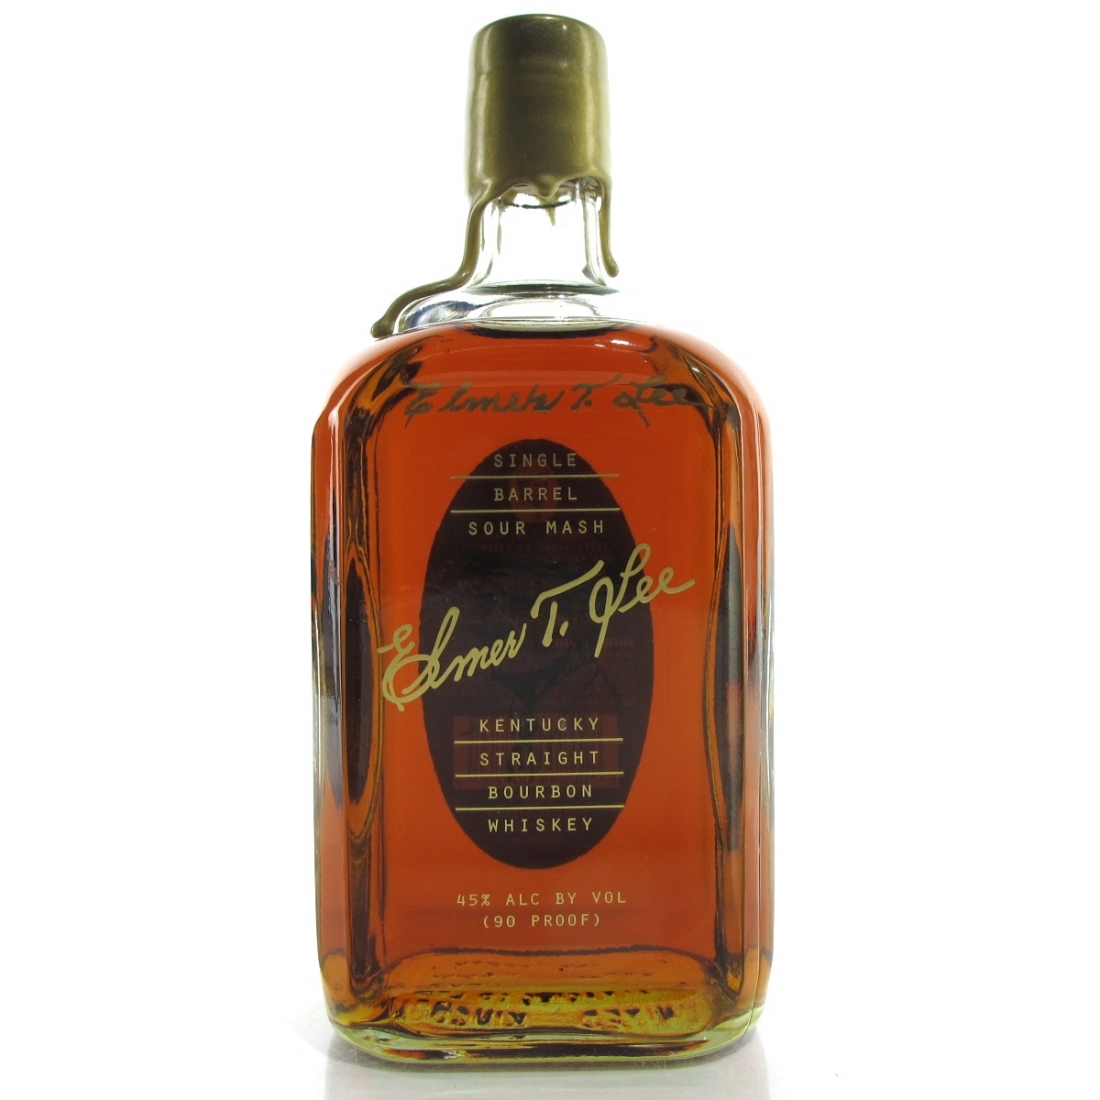 Elmer T. Lee Barrel Strength Bourbon